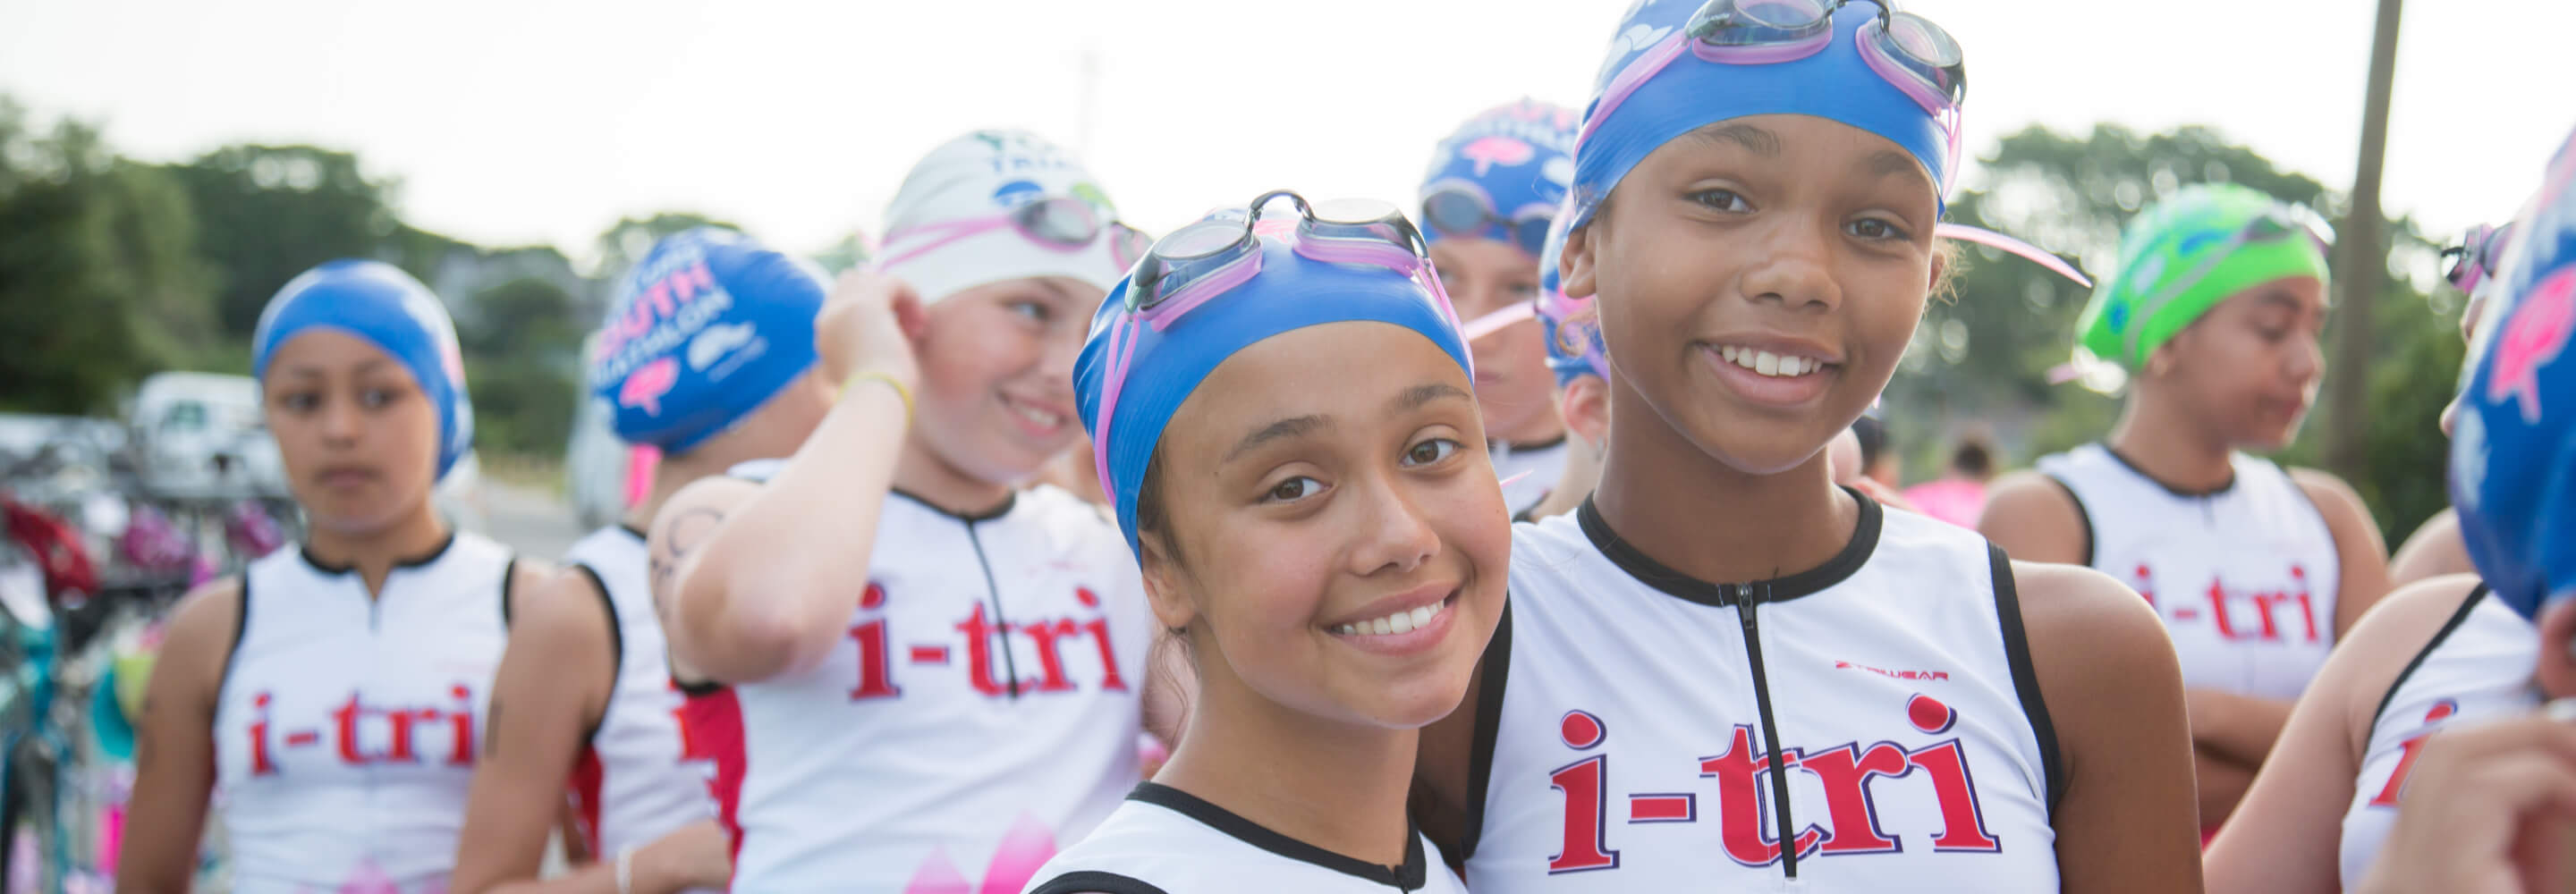 Girls in i-tri race uniforms